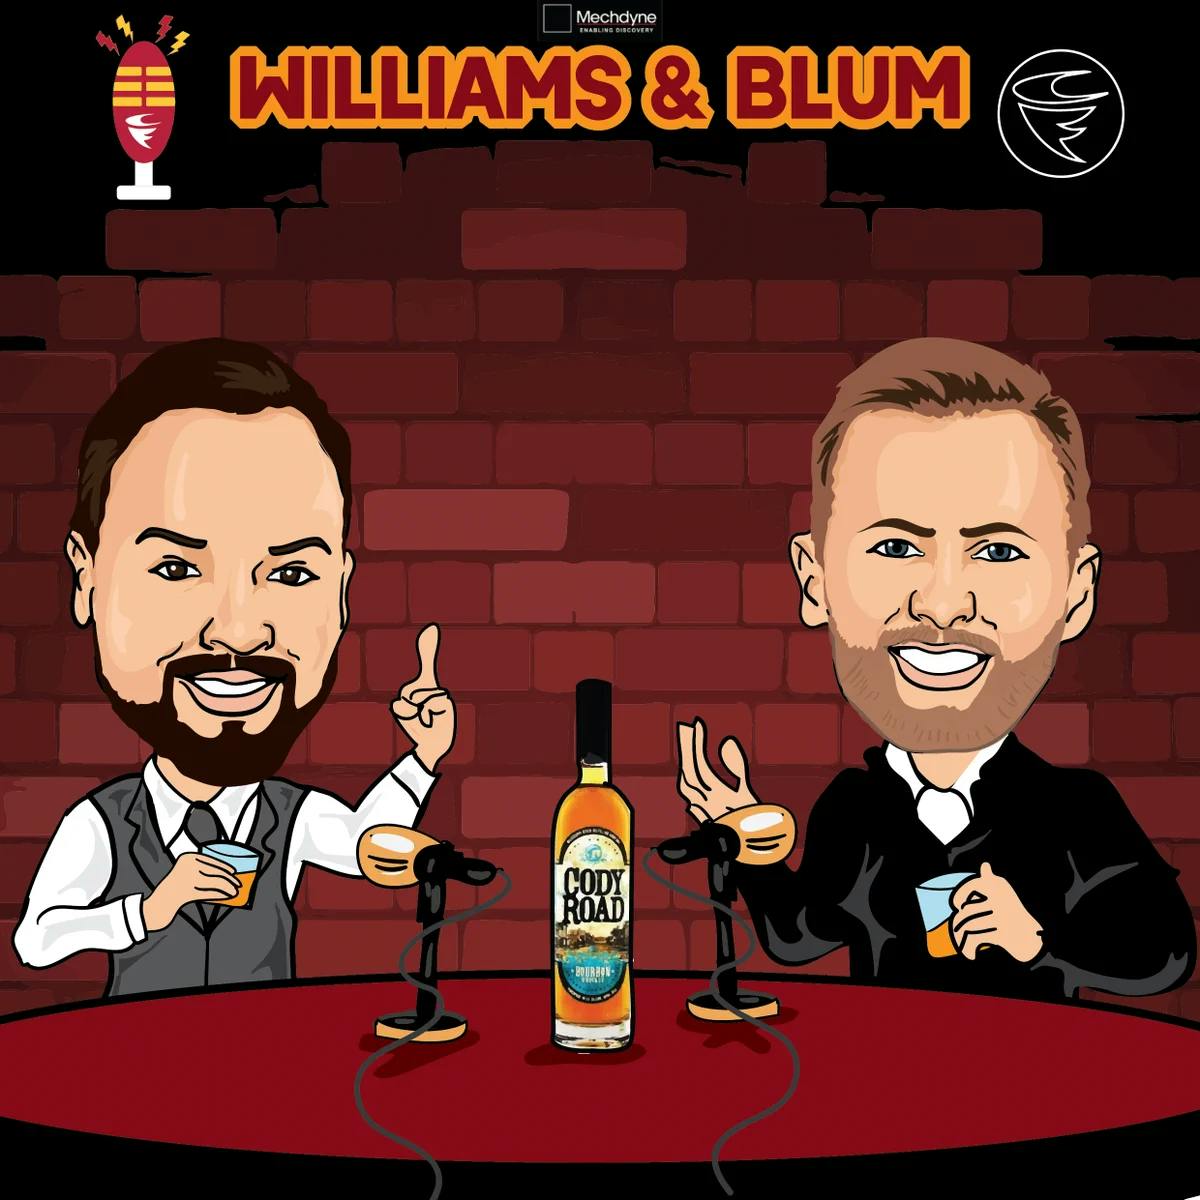 Williams & Blum: Wednesday was WILD in Hilton Coliseum